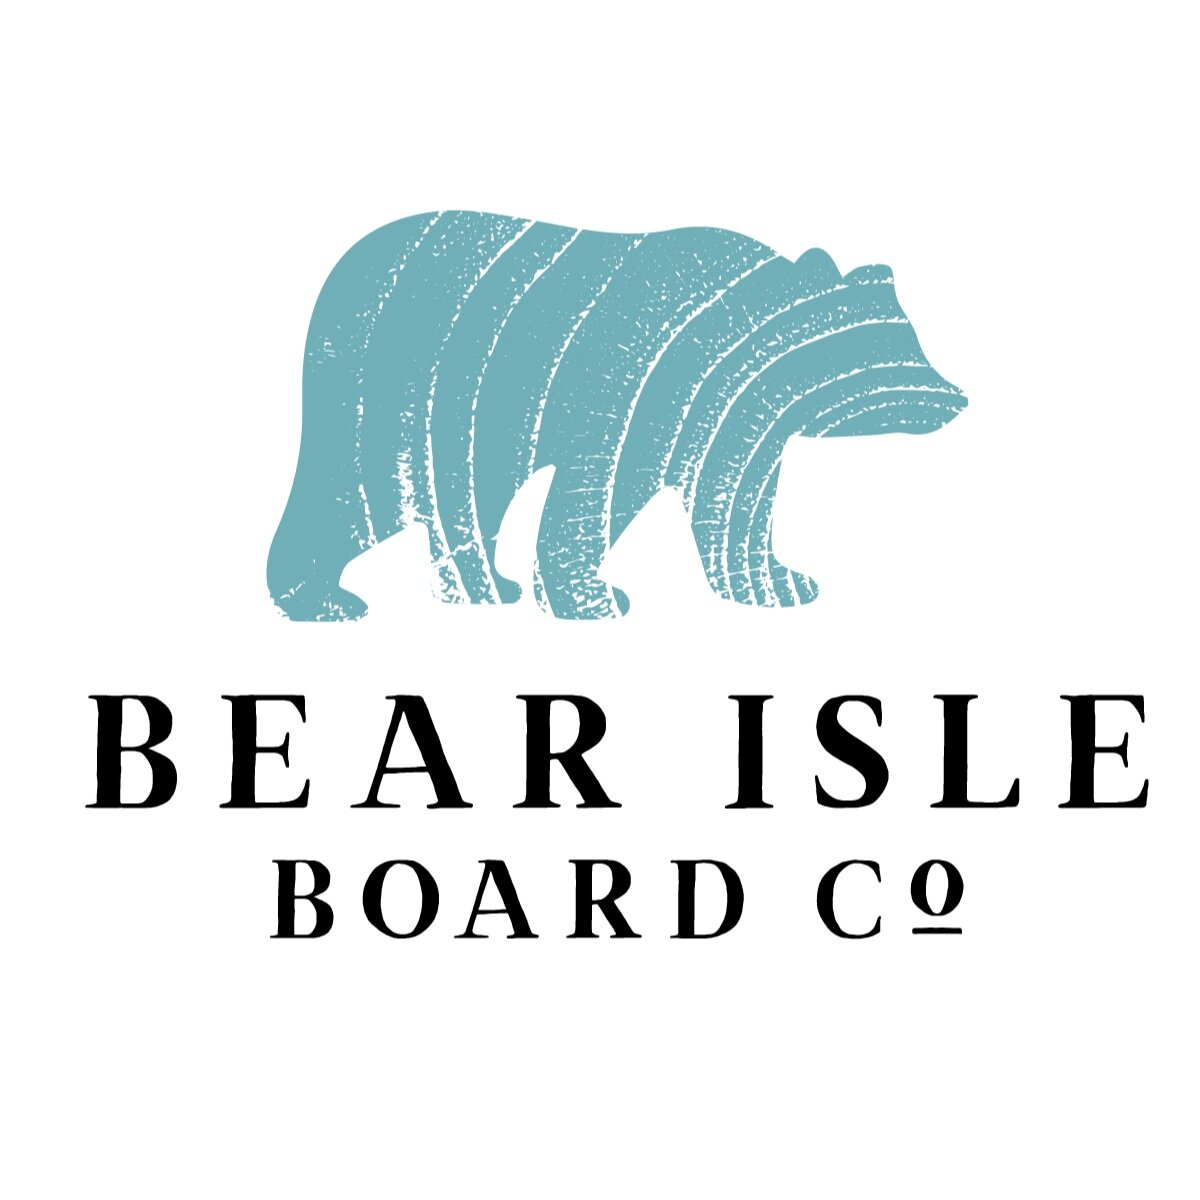 Bear Isle Board Co.